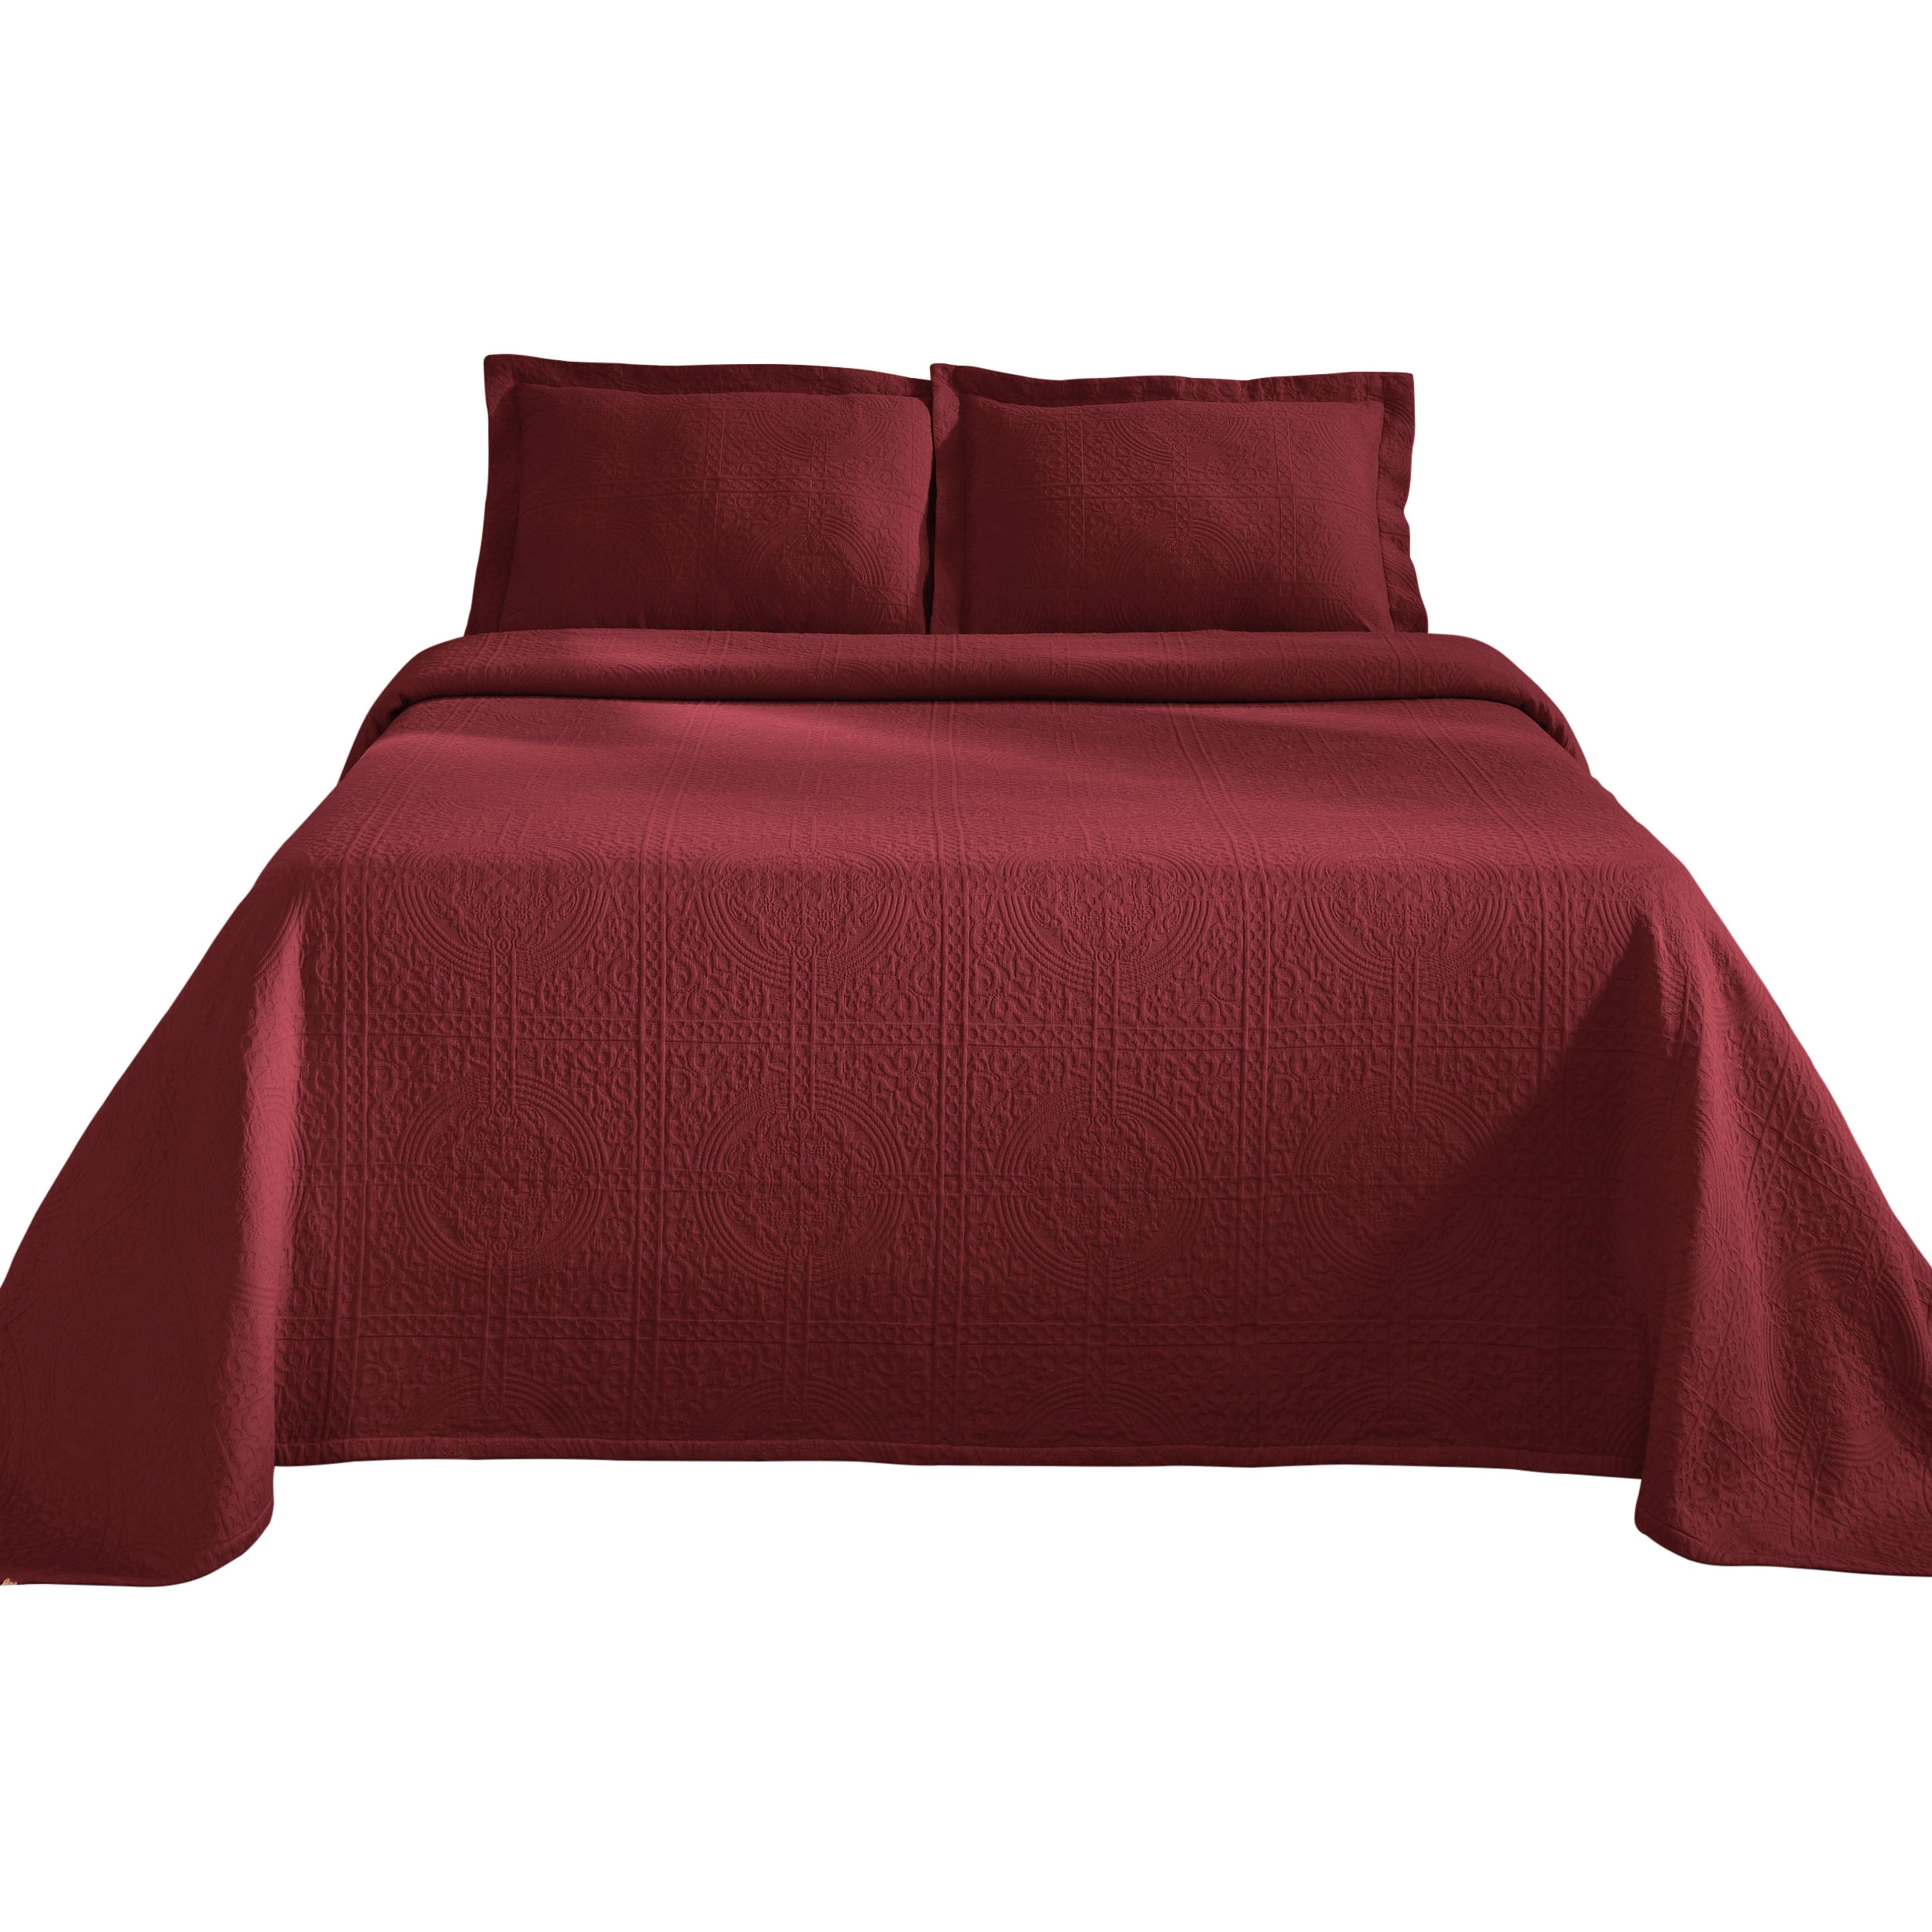 Garnet Floral Cotton Twin Bedspread Set with Pillowsham